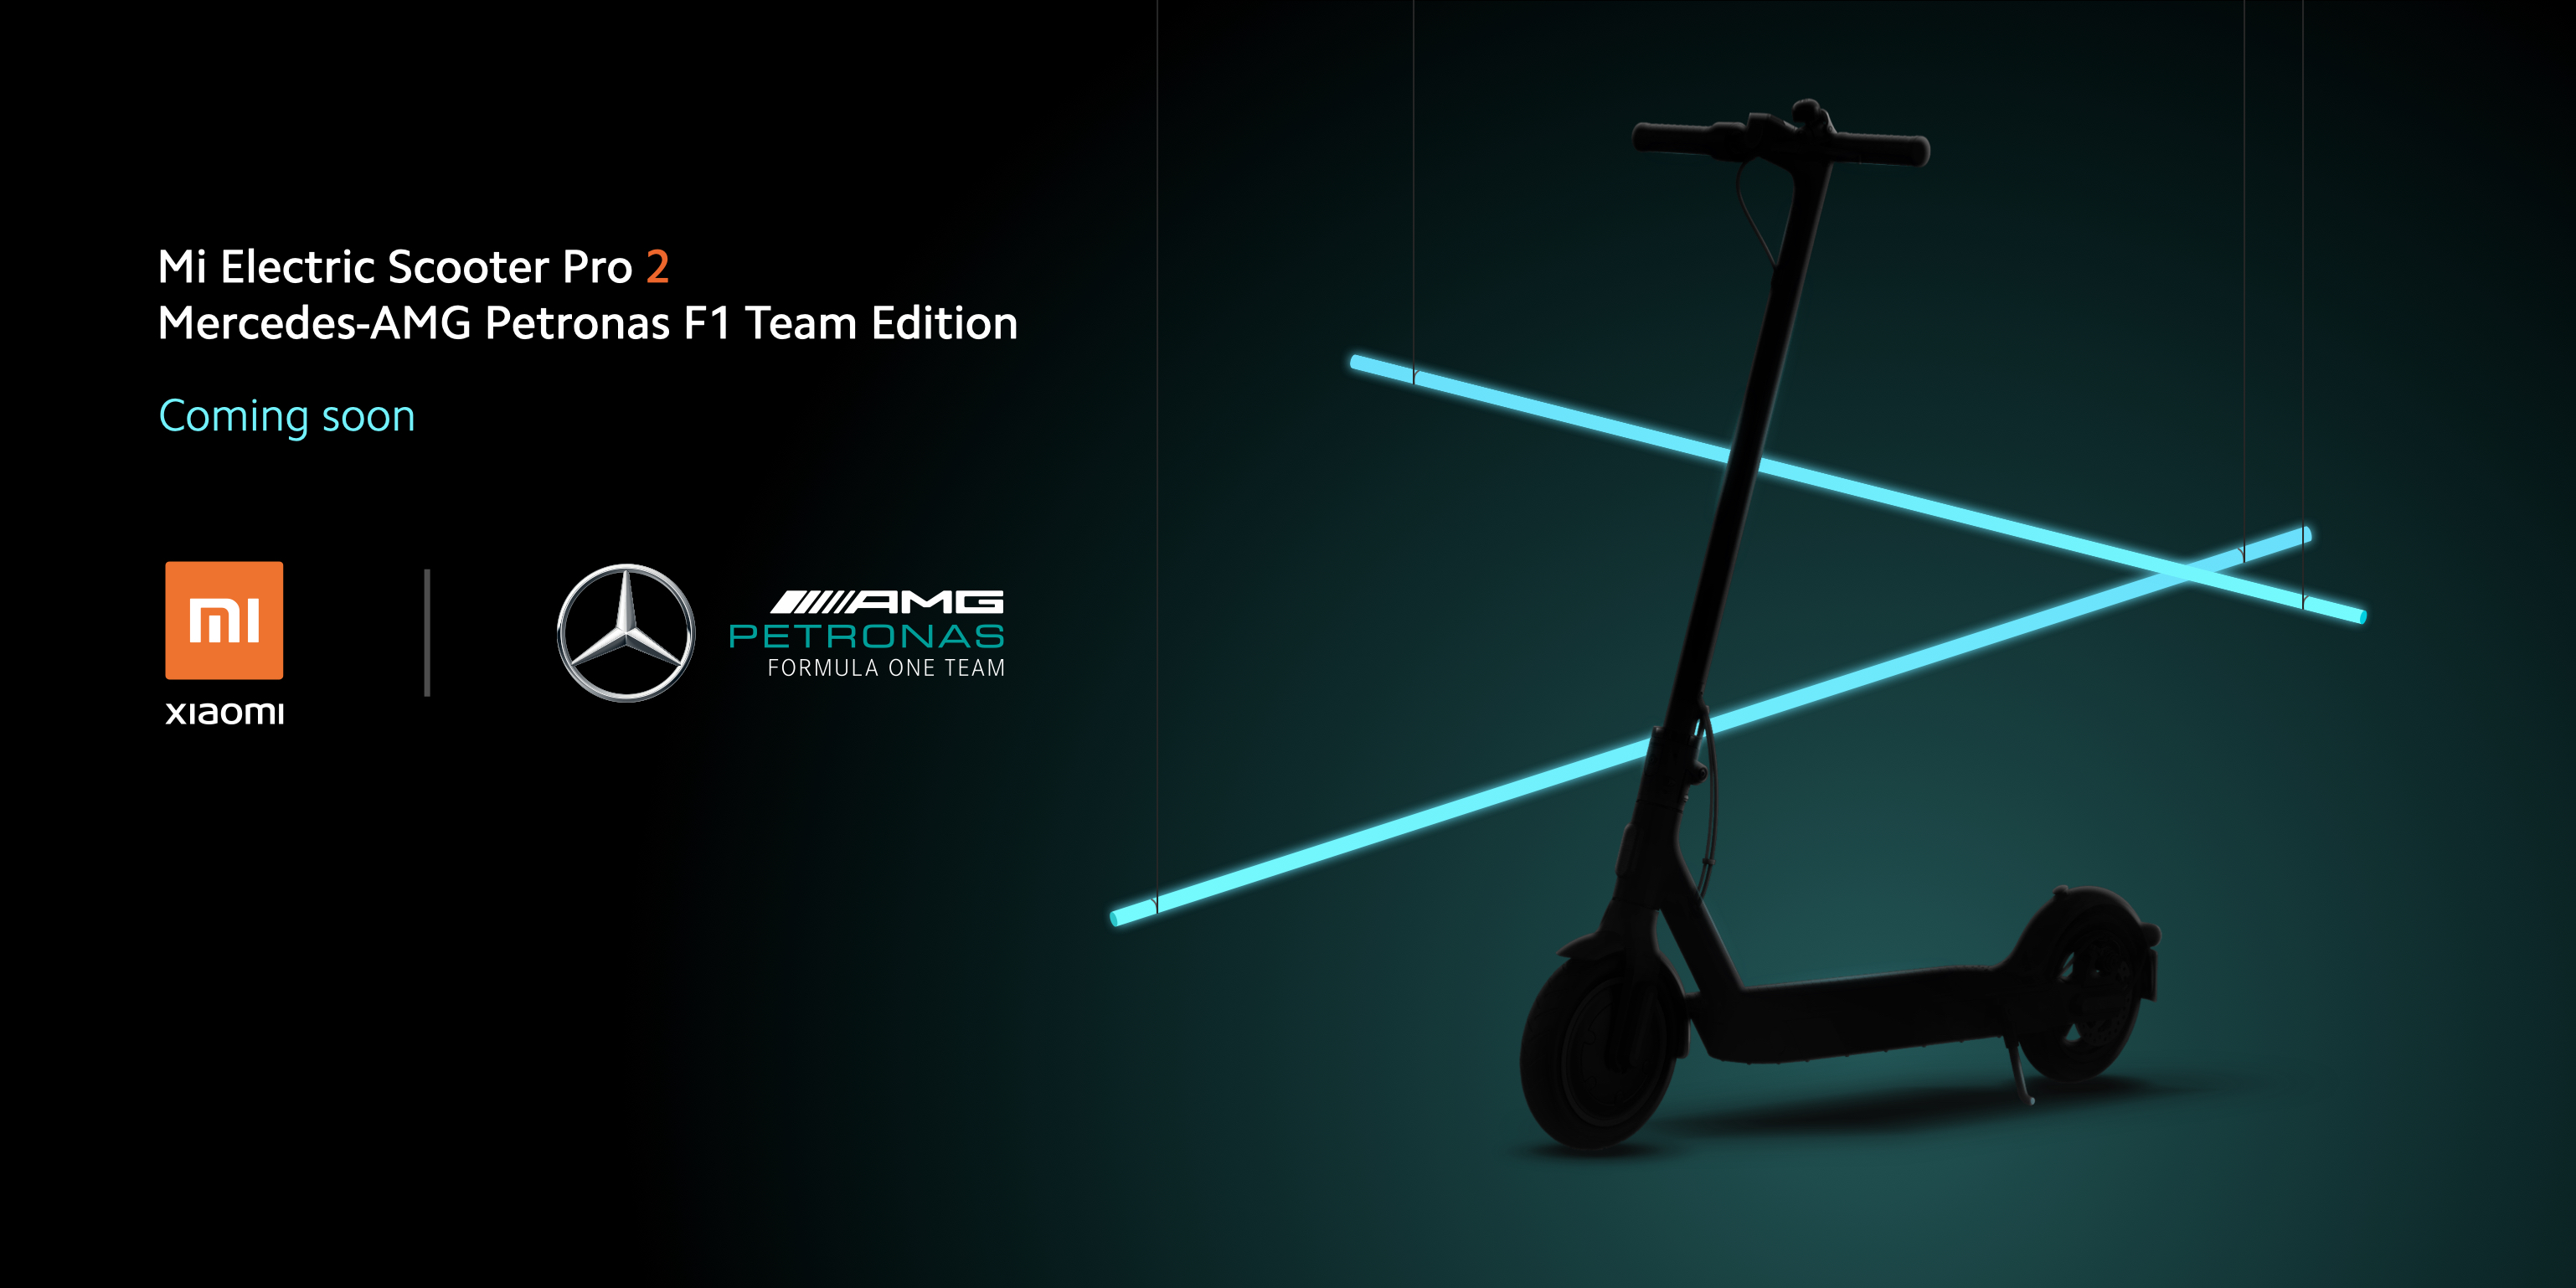 mi-electric-scooter-pro-2-mercedes-amg-petronas-f1-team-edition - Mi Global  Home